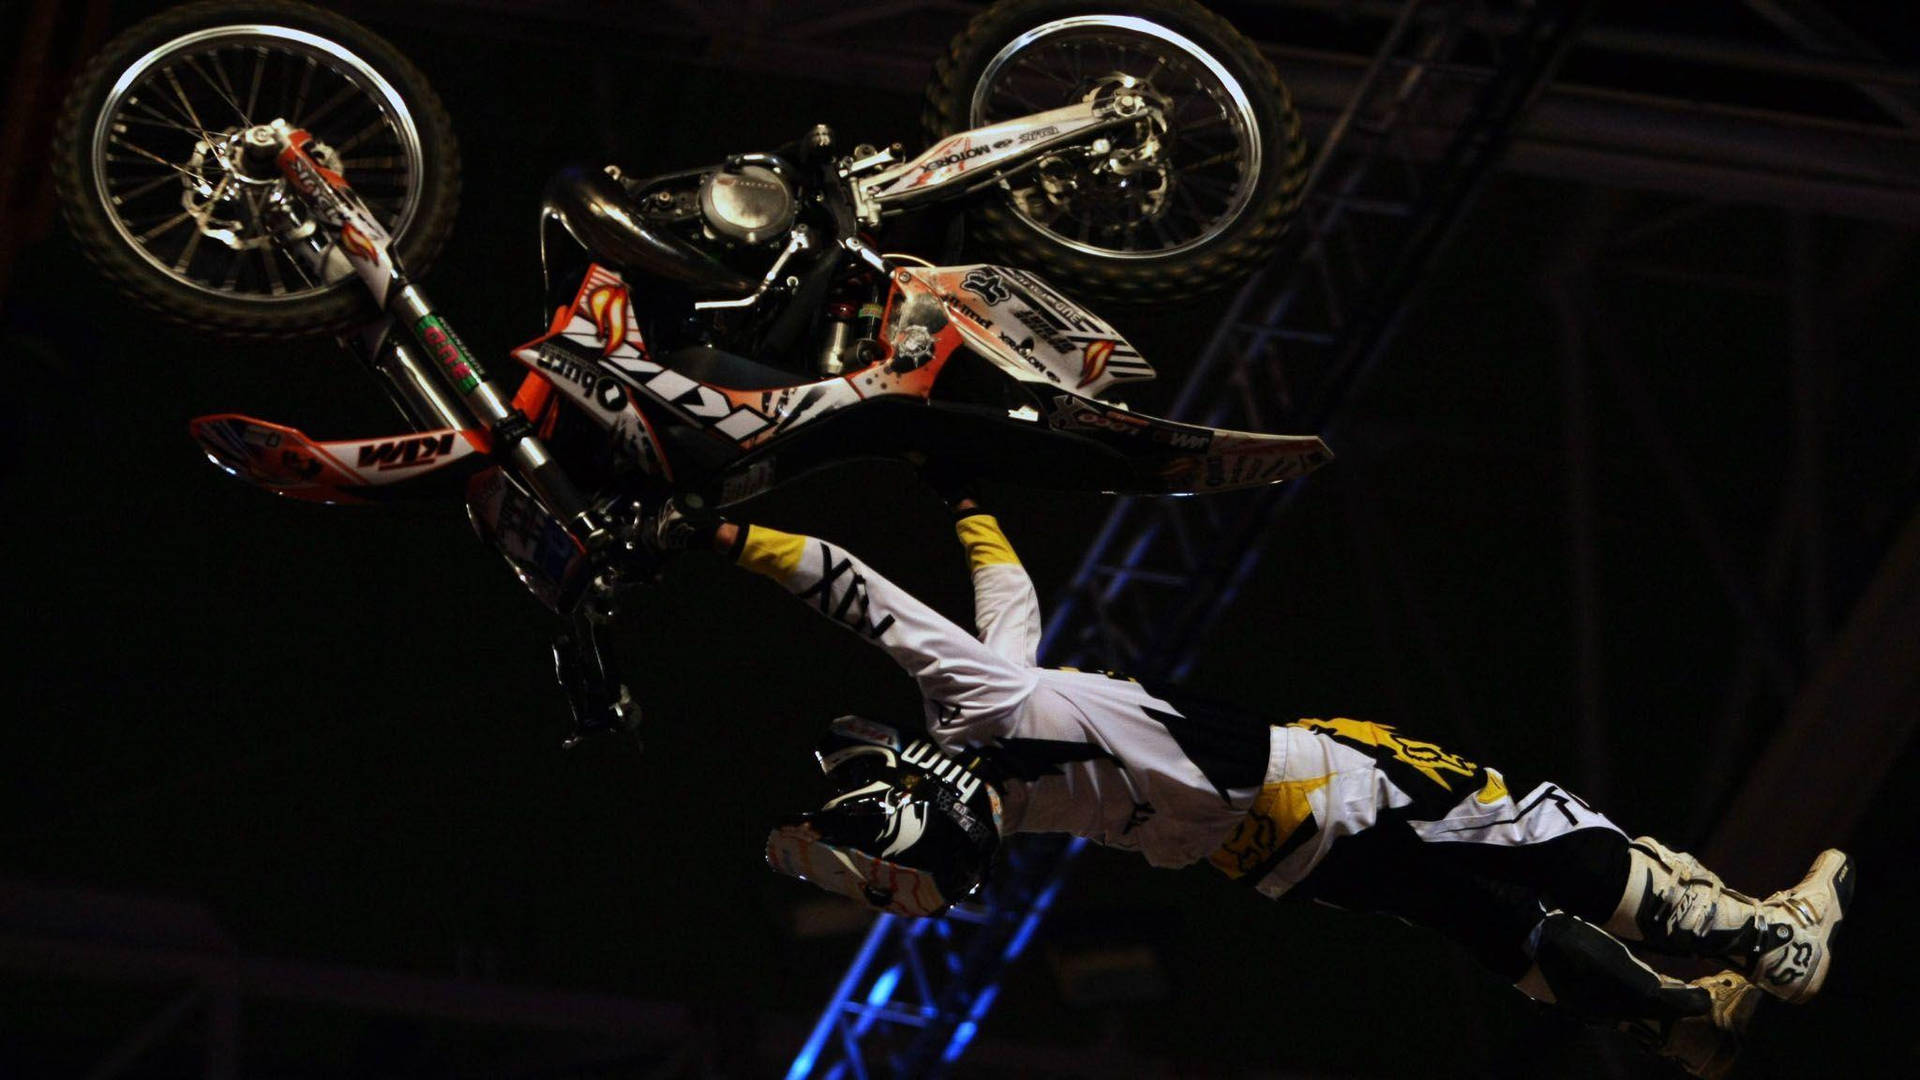 X Games Motocross Aerial Stunt Wallpaper